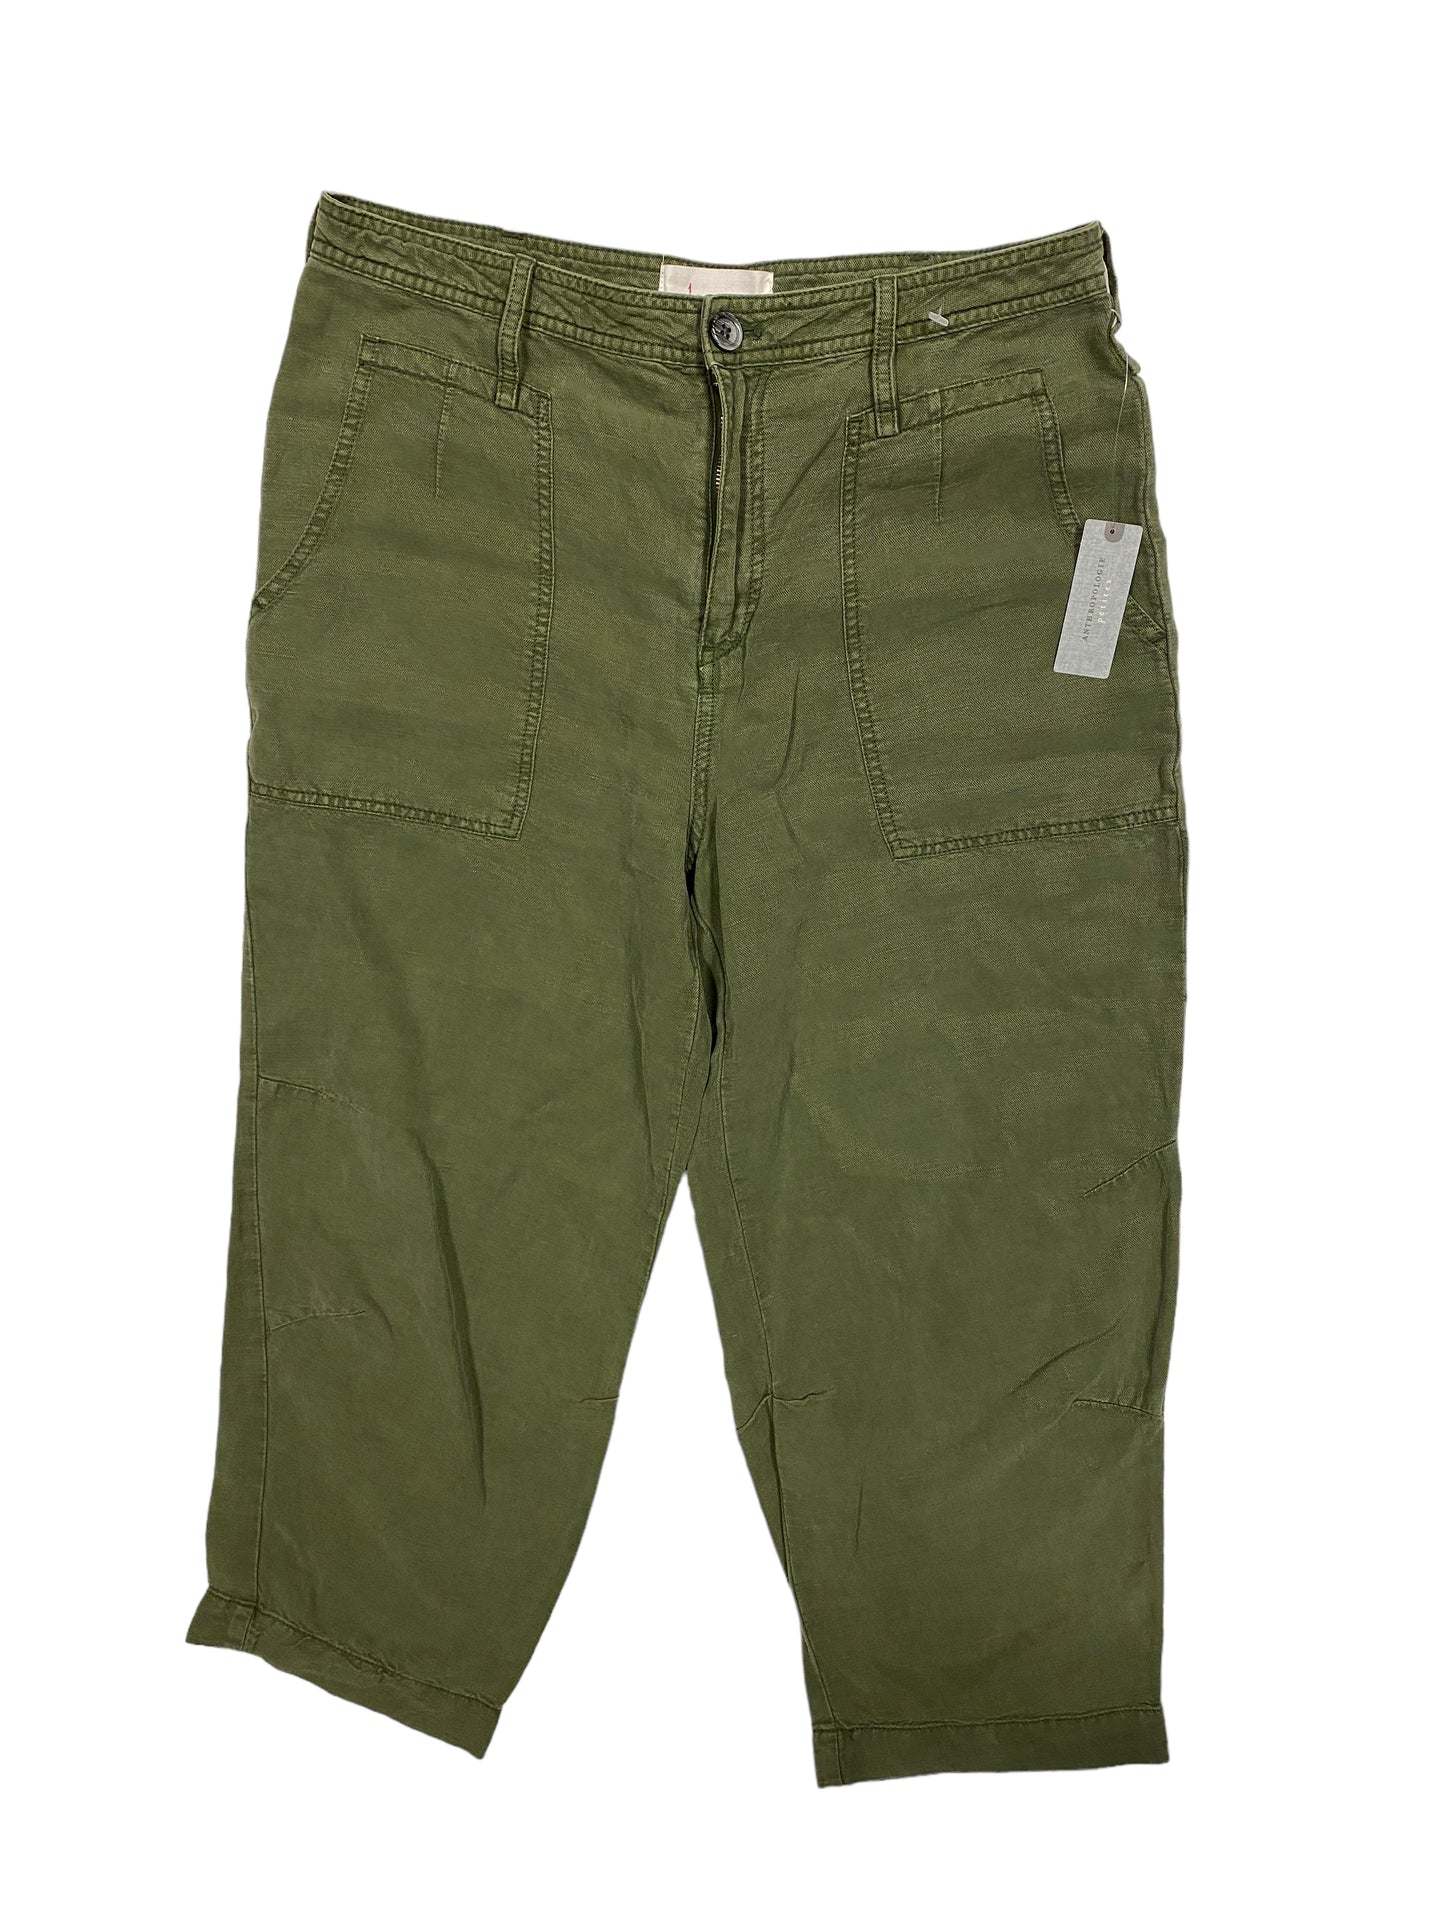 Green Pants Cargo & Utility Anthropologie, Size 12